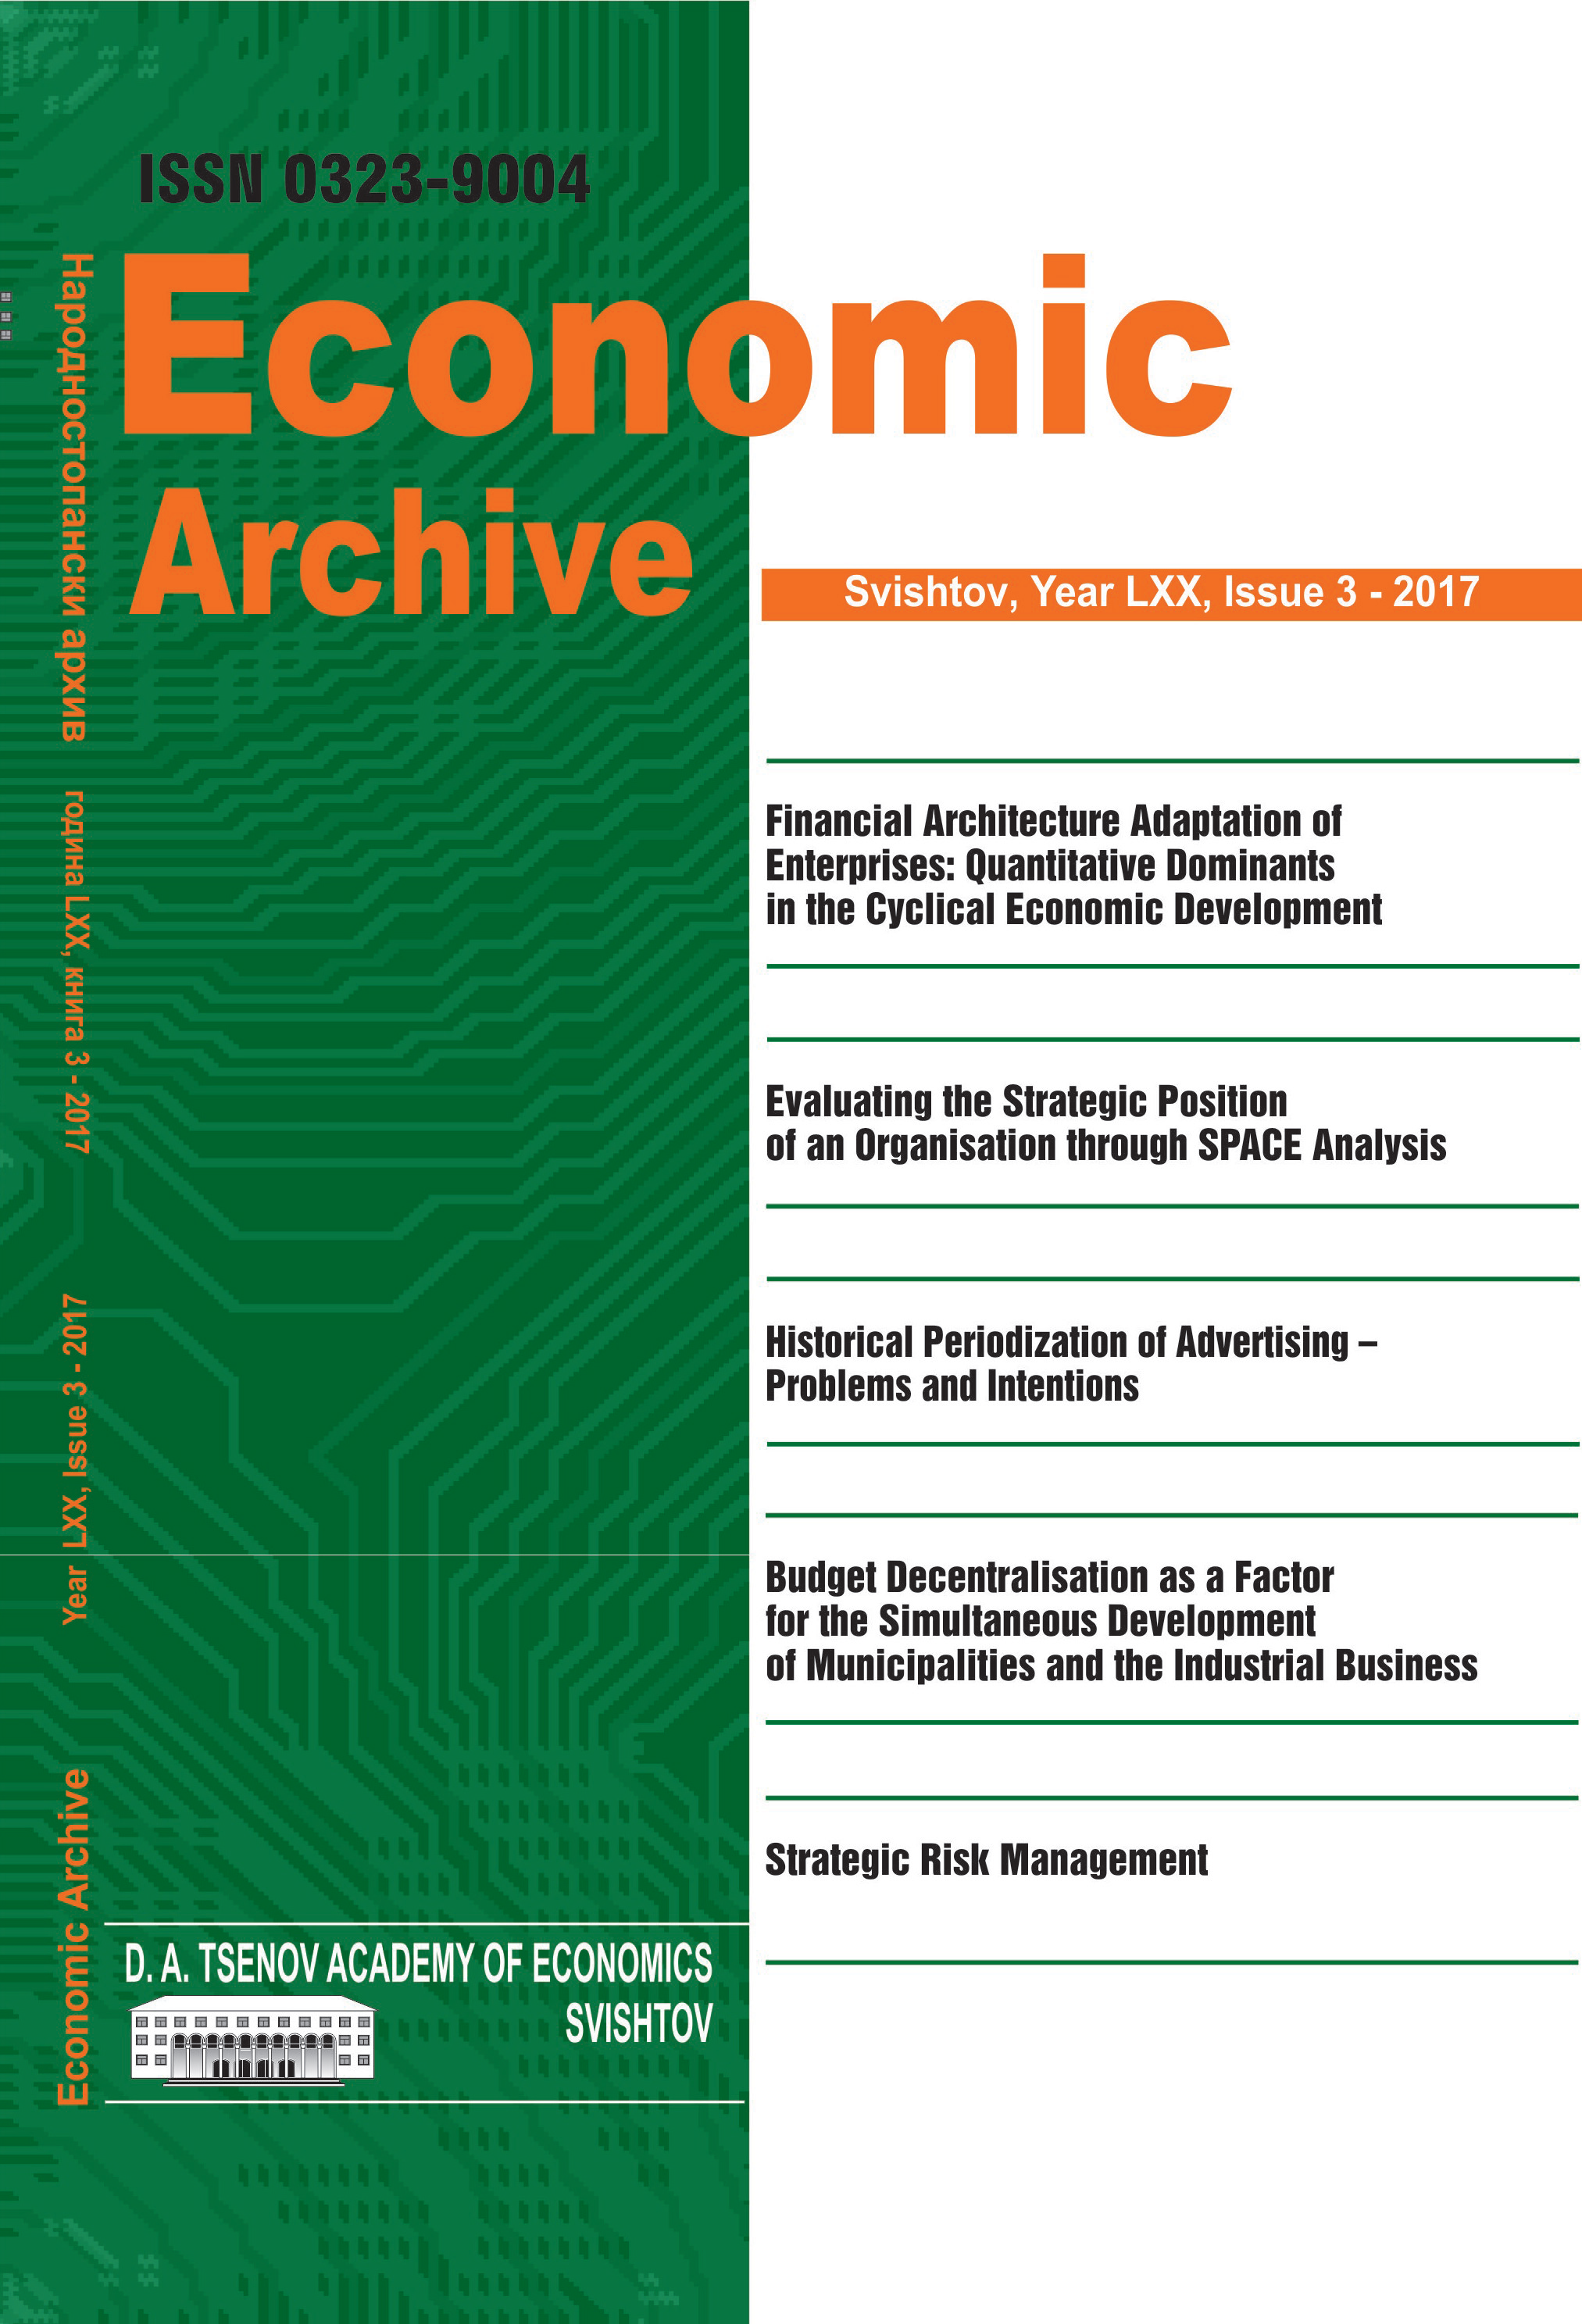 FINANCIAL ARCHITECTURE ADAPTATION OF ENTERPRISES: QUANTITATIVE DOMINANTS IN THE CYCLICAL ECONOMIC DEVELOPMENT Cover Image